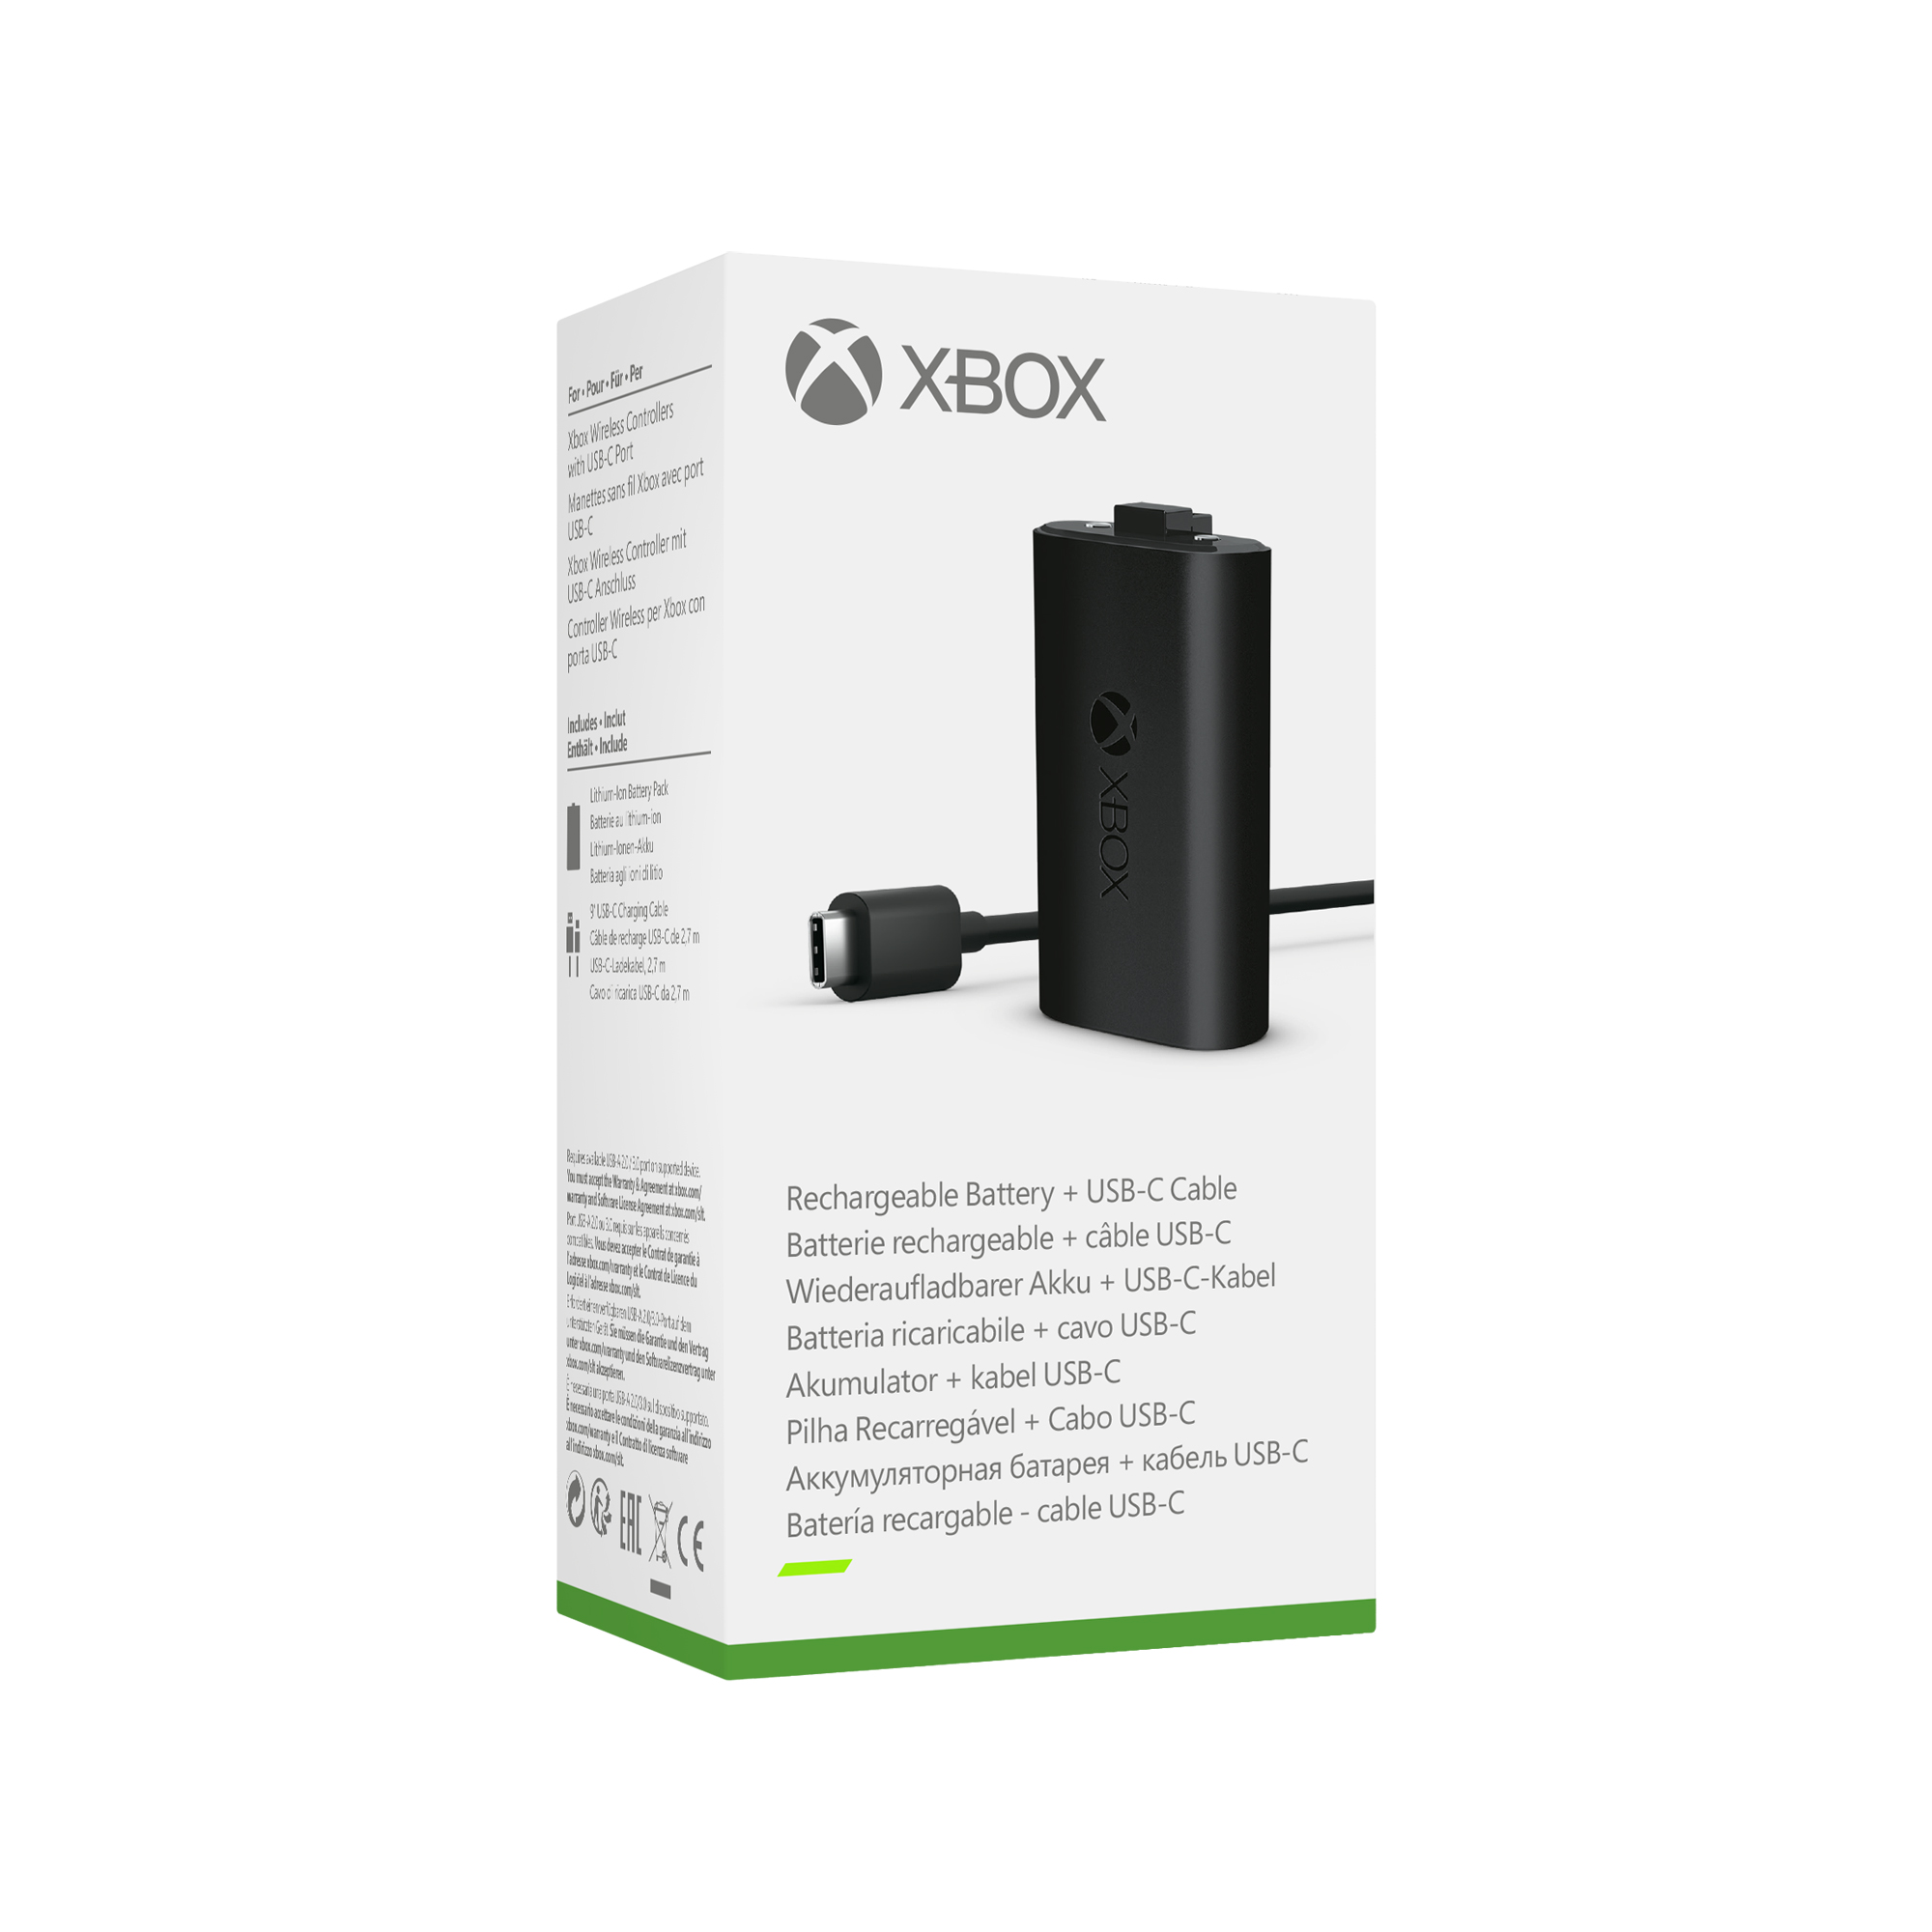 Кабель xbox series x. Зарядный комплект Microsoft Play and charge Kit для Xbox one. Геймпад Xbox Series s аккумулятор. Аккумулятор с зарядкой для геймпада Xbox one. Аккумуляторная батарея Xbox и кабель USB-C.